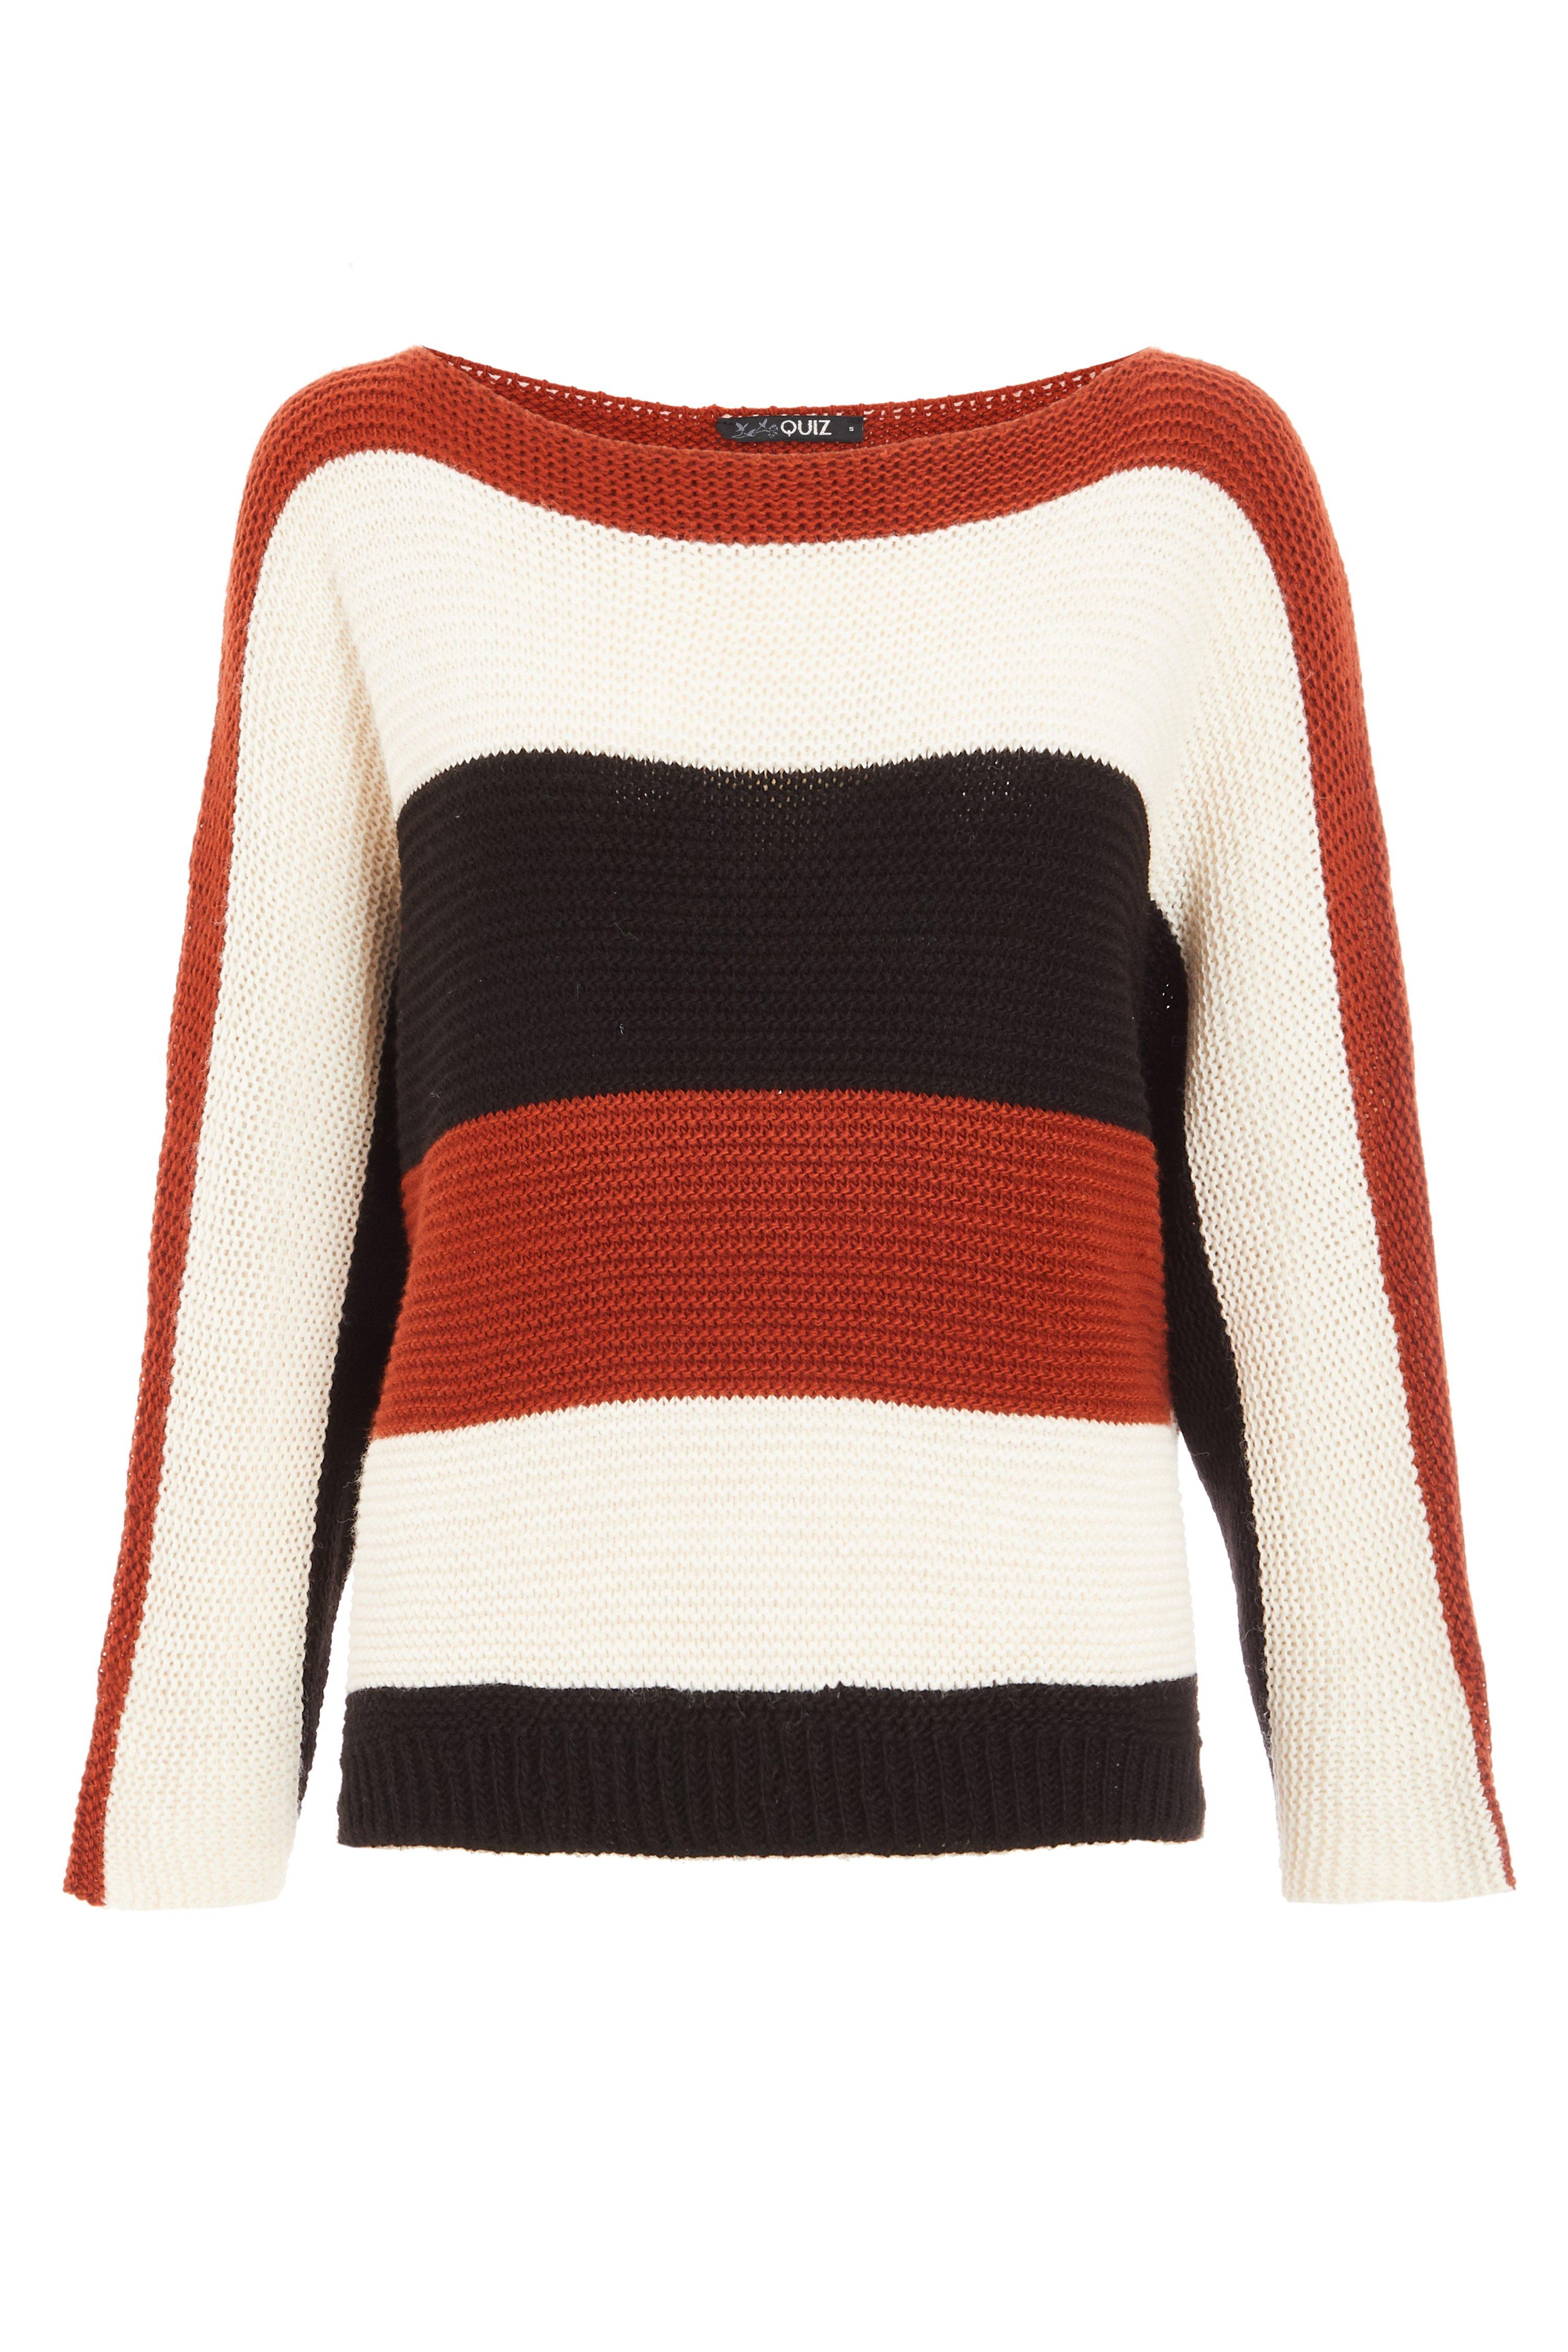 Cream Rust and Black Stripe Knit Jumper - Quiz Clothing